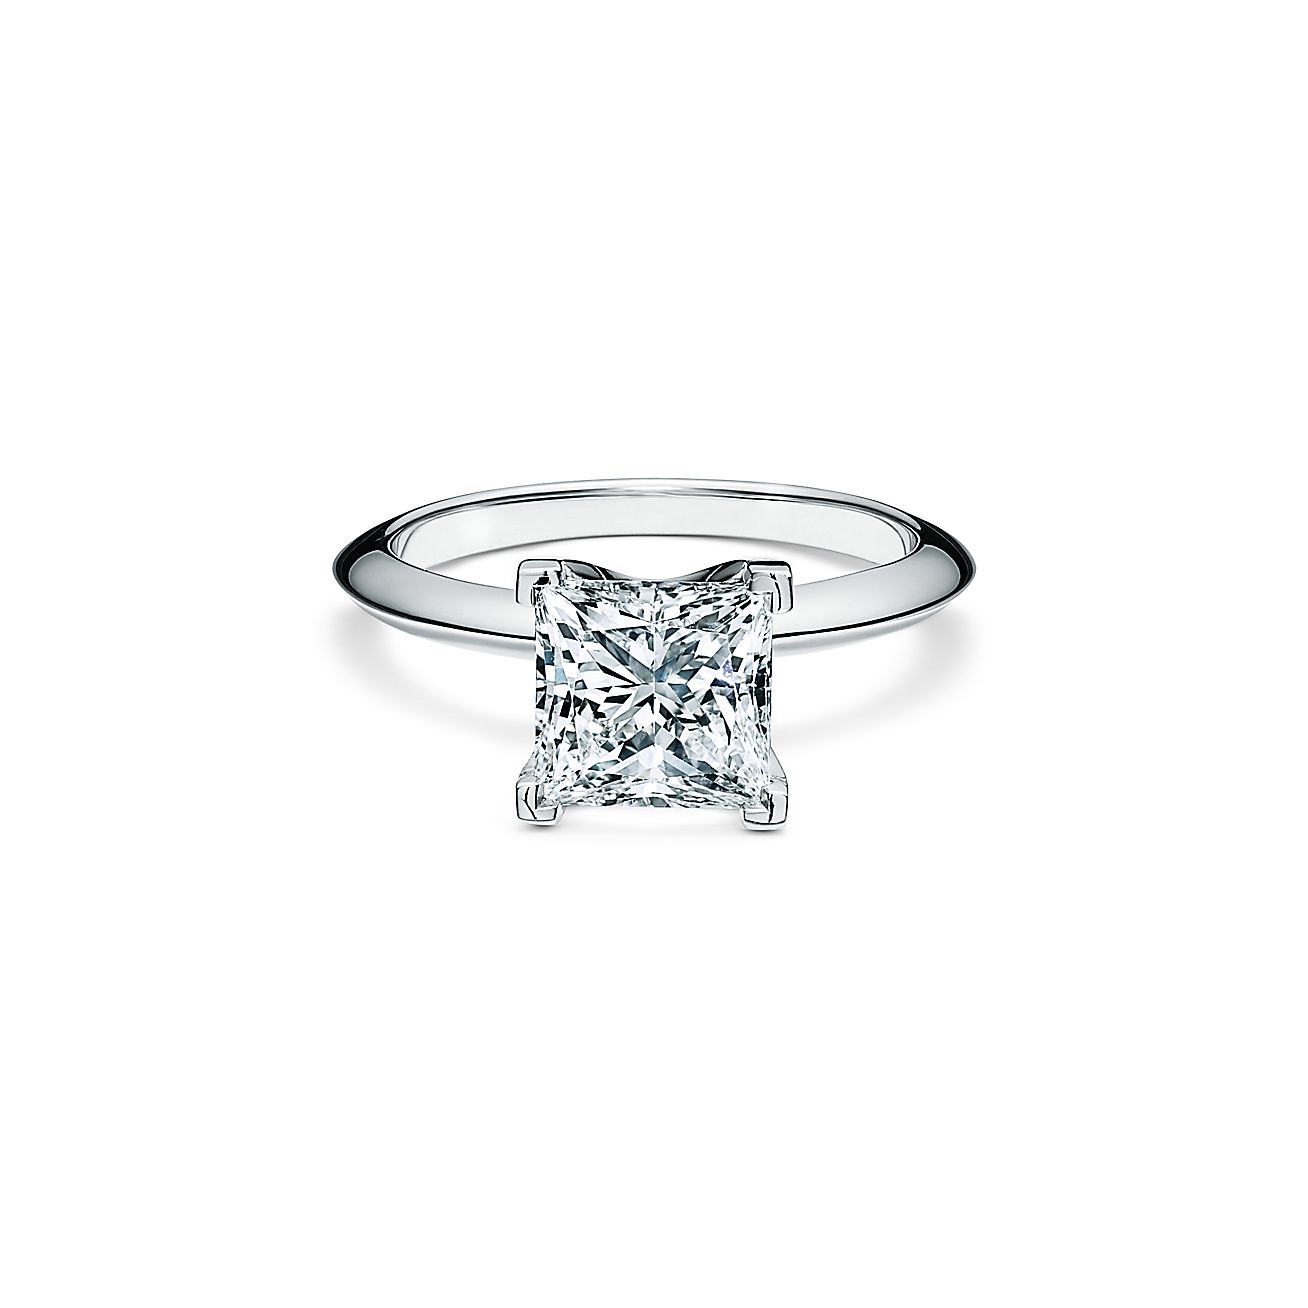 Anillo de compromiso en platino con diamante en princesa: un clásico. | Tiffany & Co.